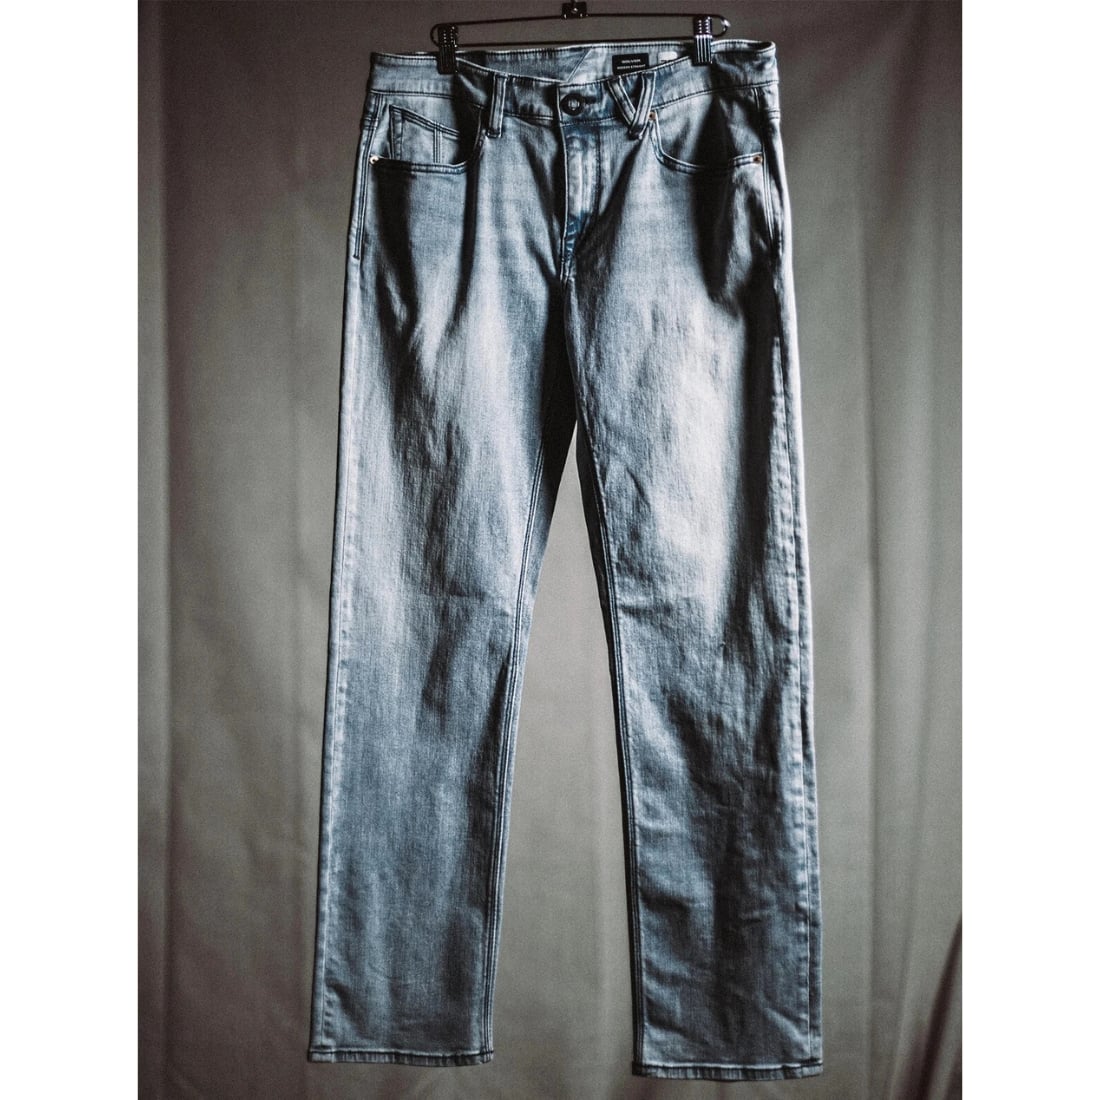 Volcom Solver Denim - Powder Blue - Mens Regular/Straight Denim Jeans by Volcom